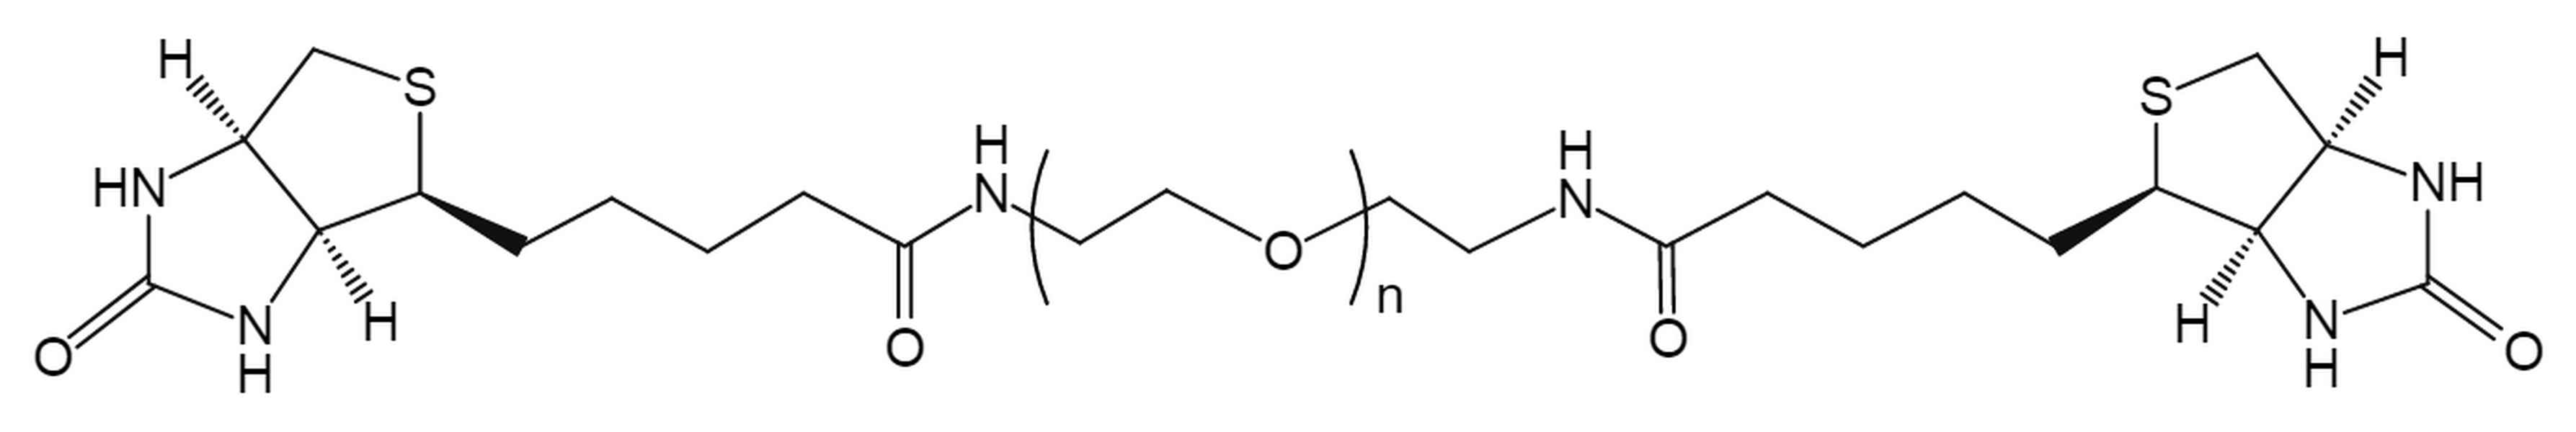 Biotin-PEG-Biotin, MW 5K